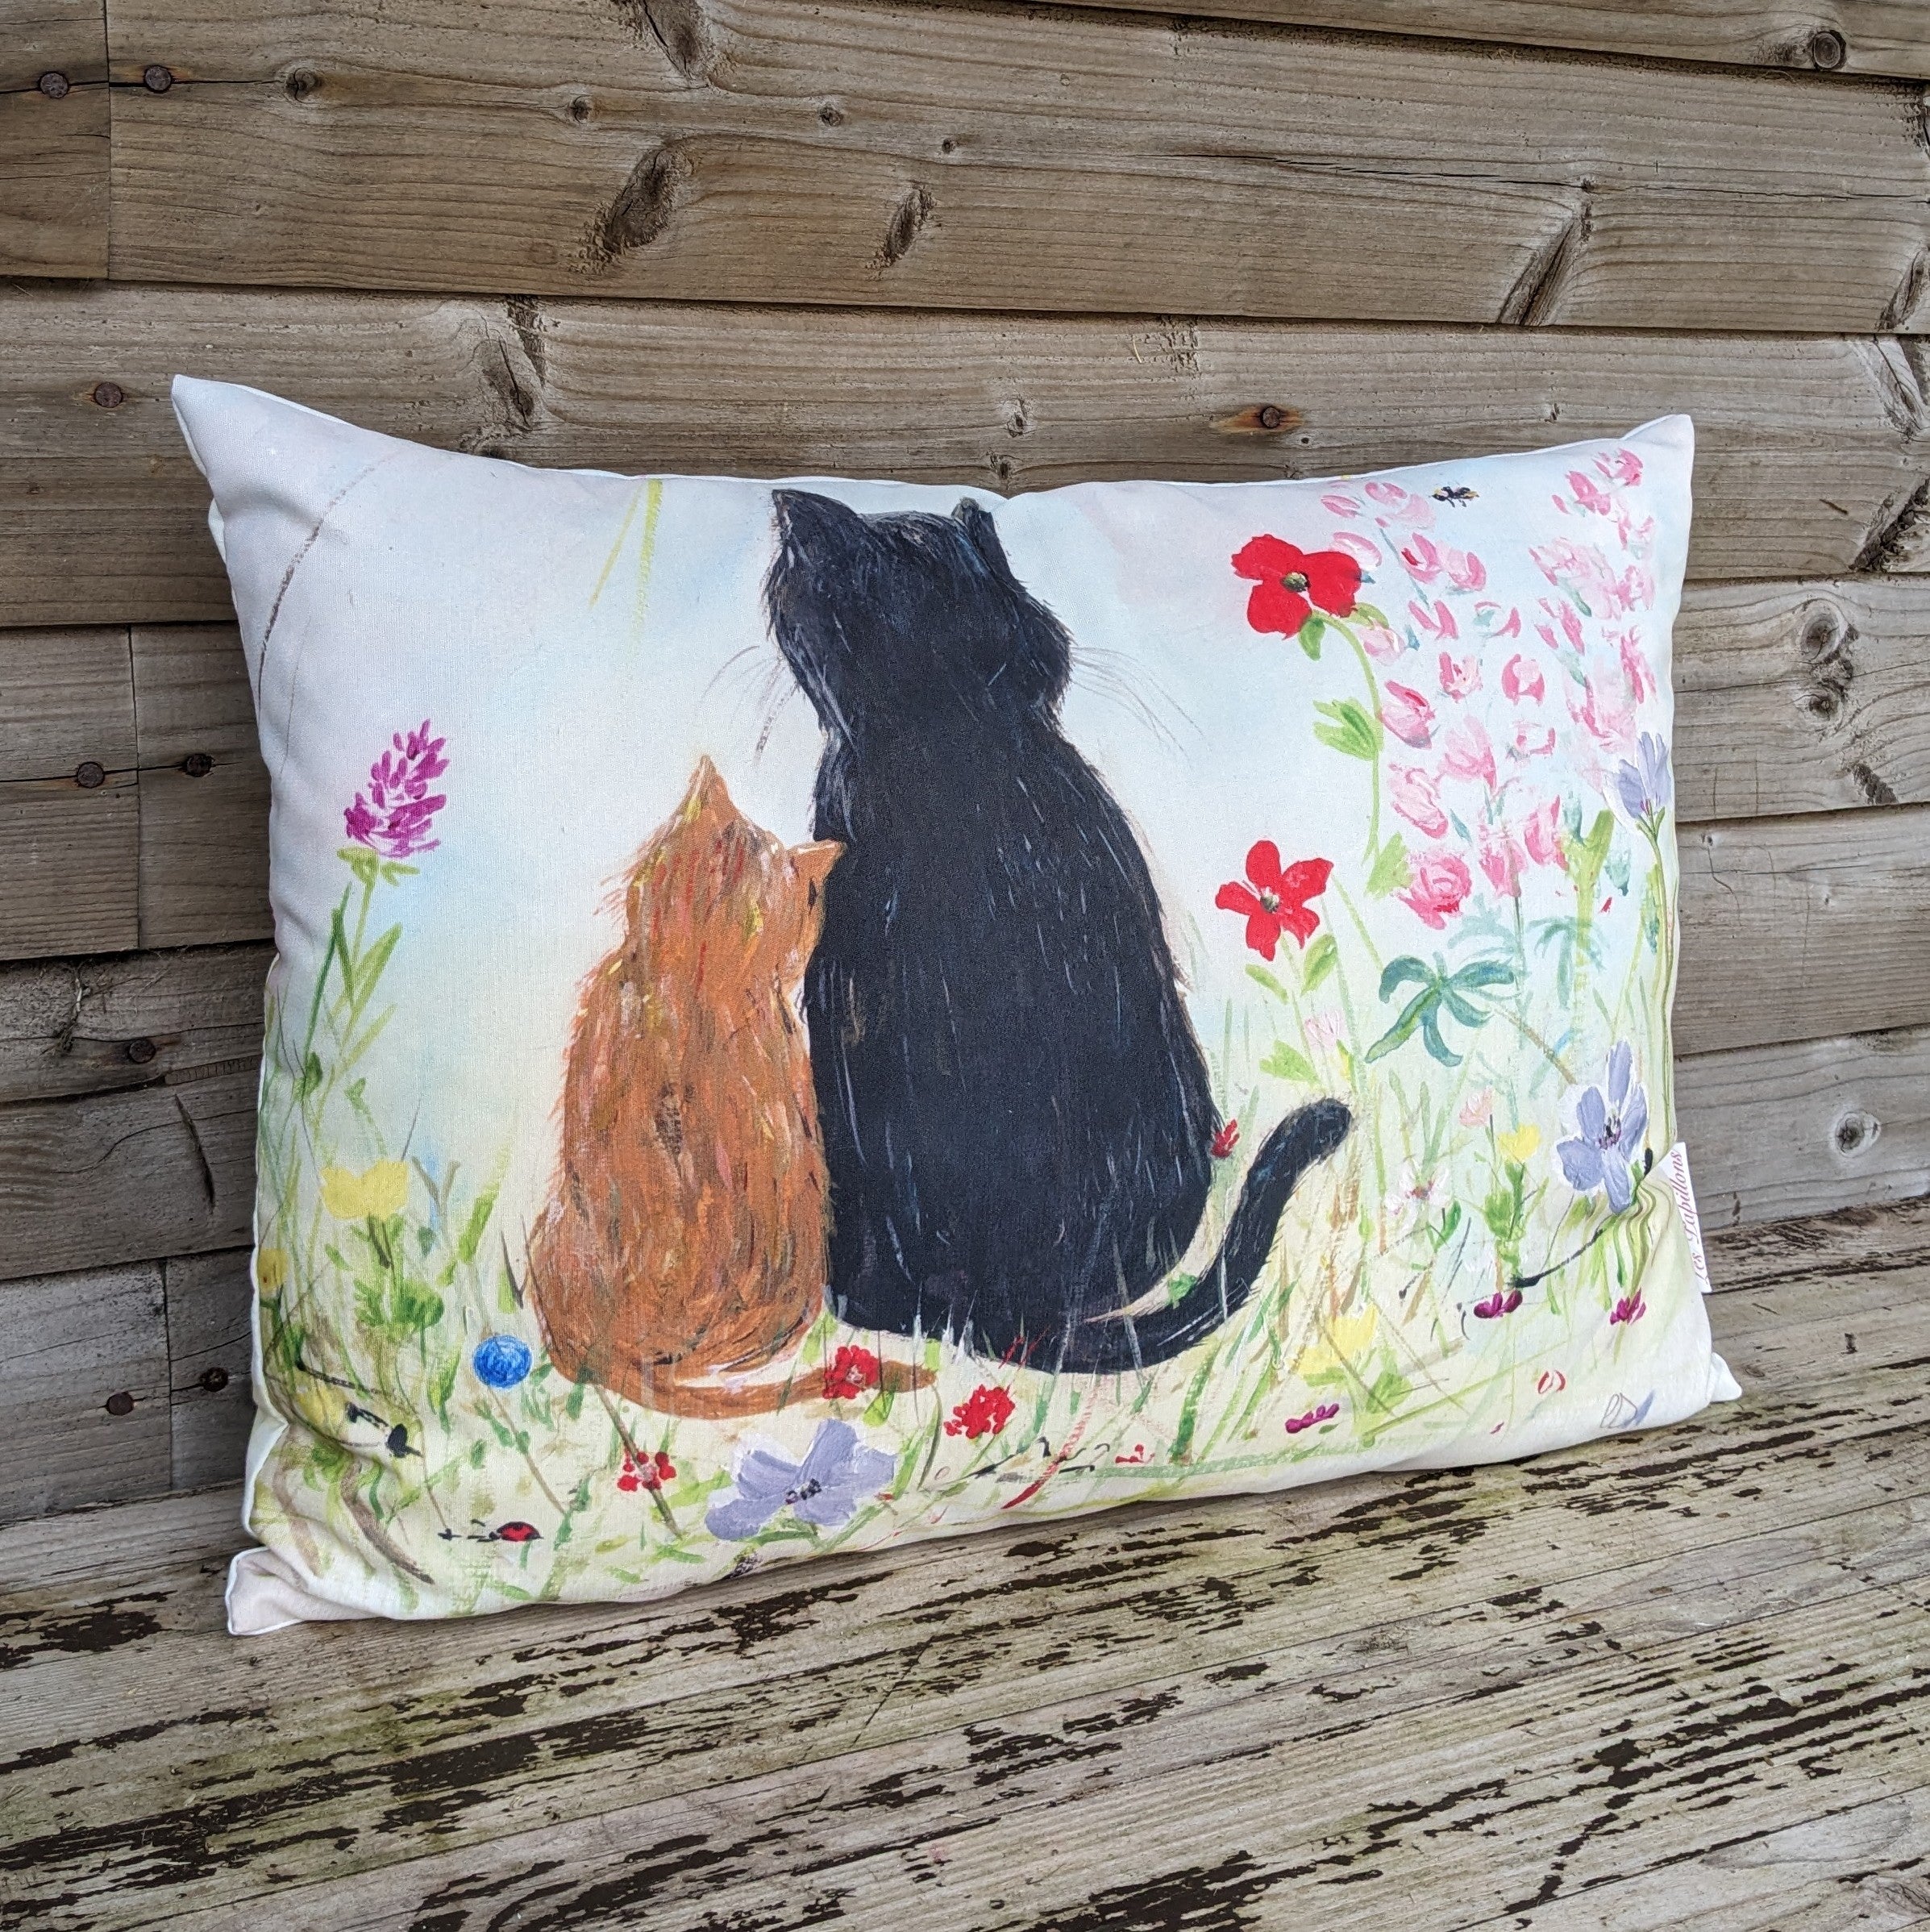 Outdoor Cushion (Cat and Kitten)